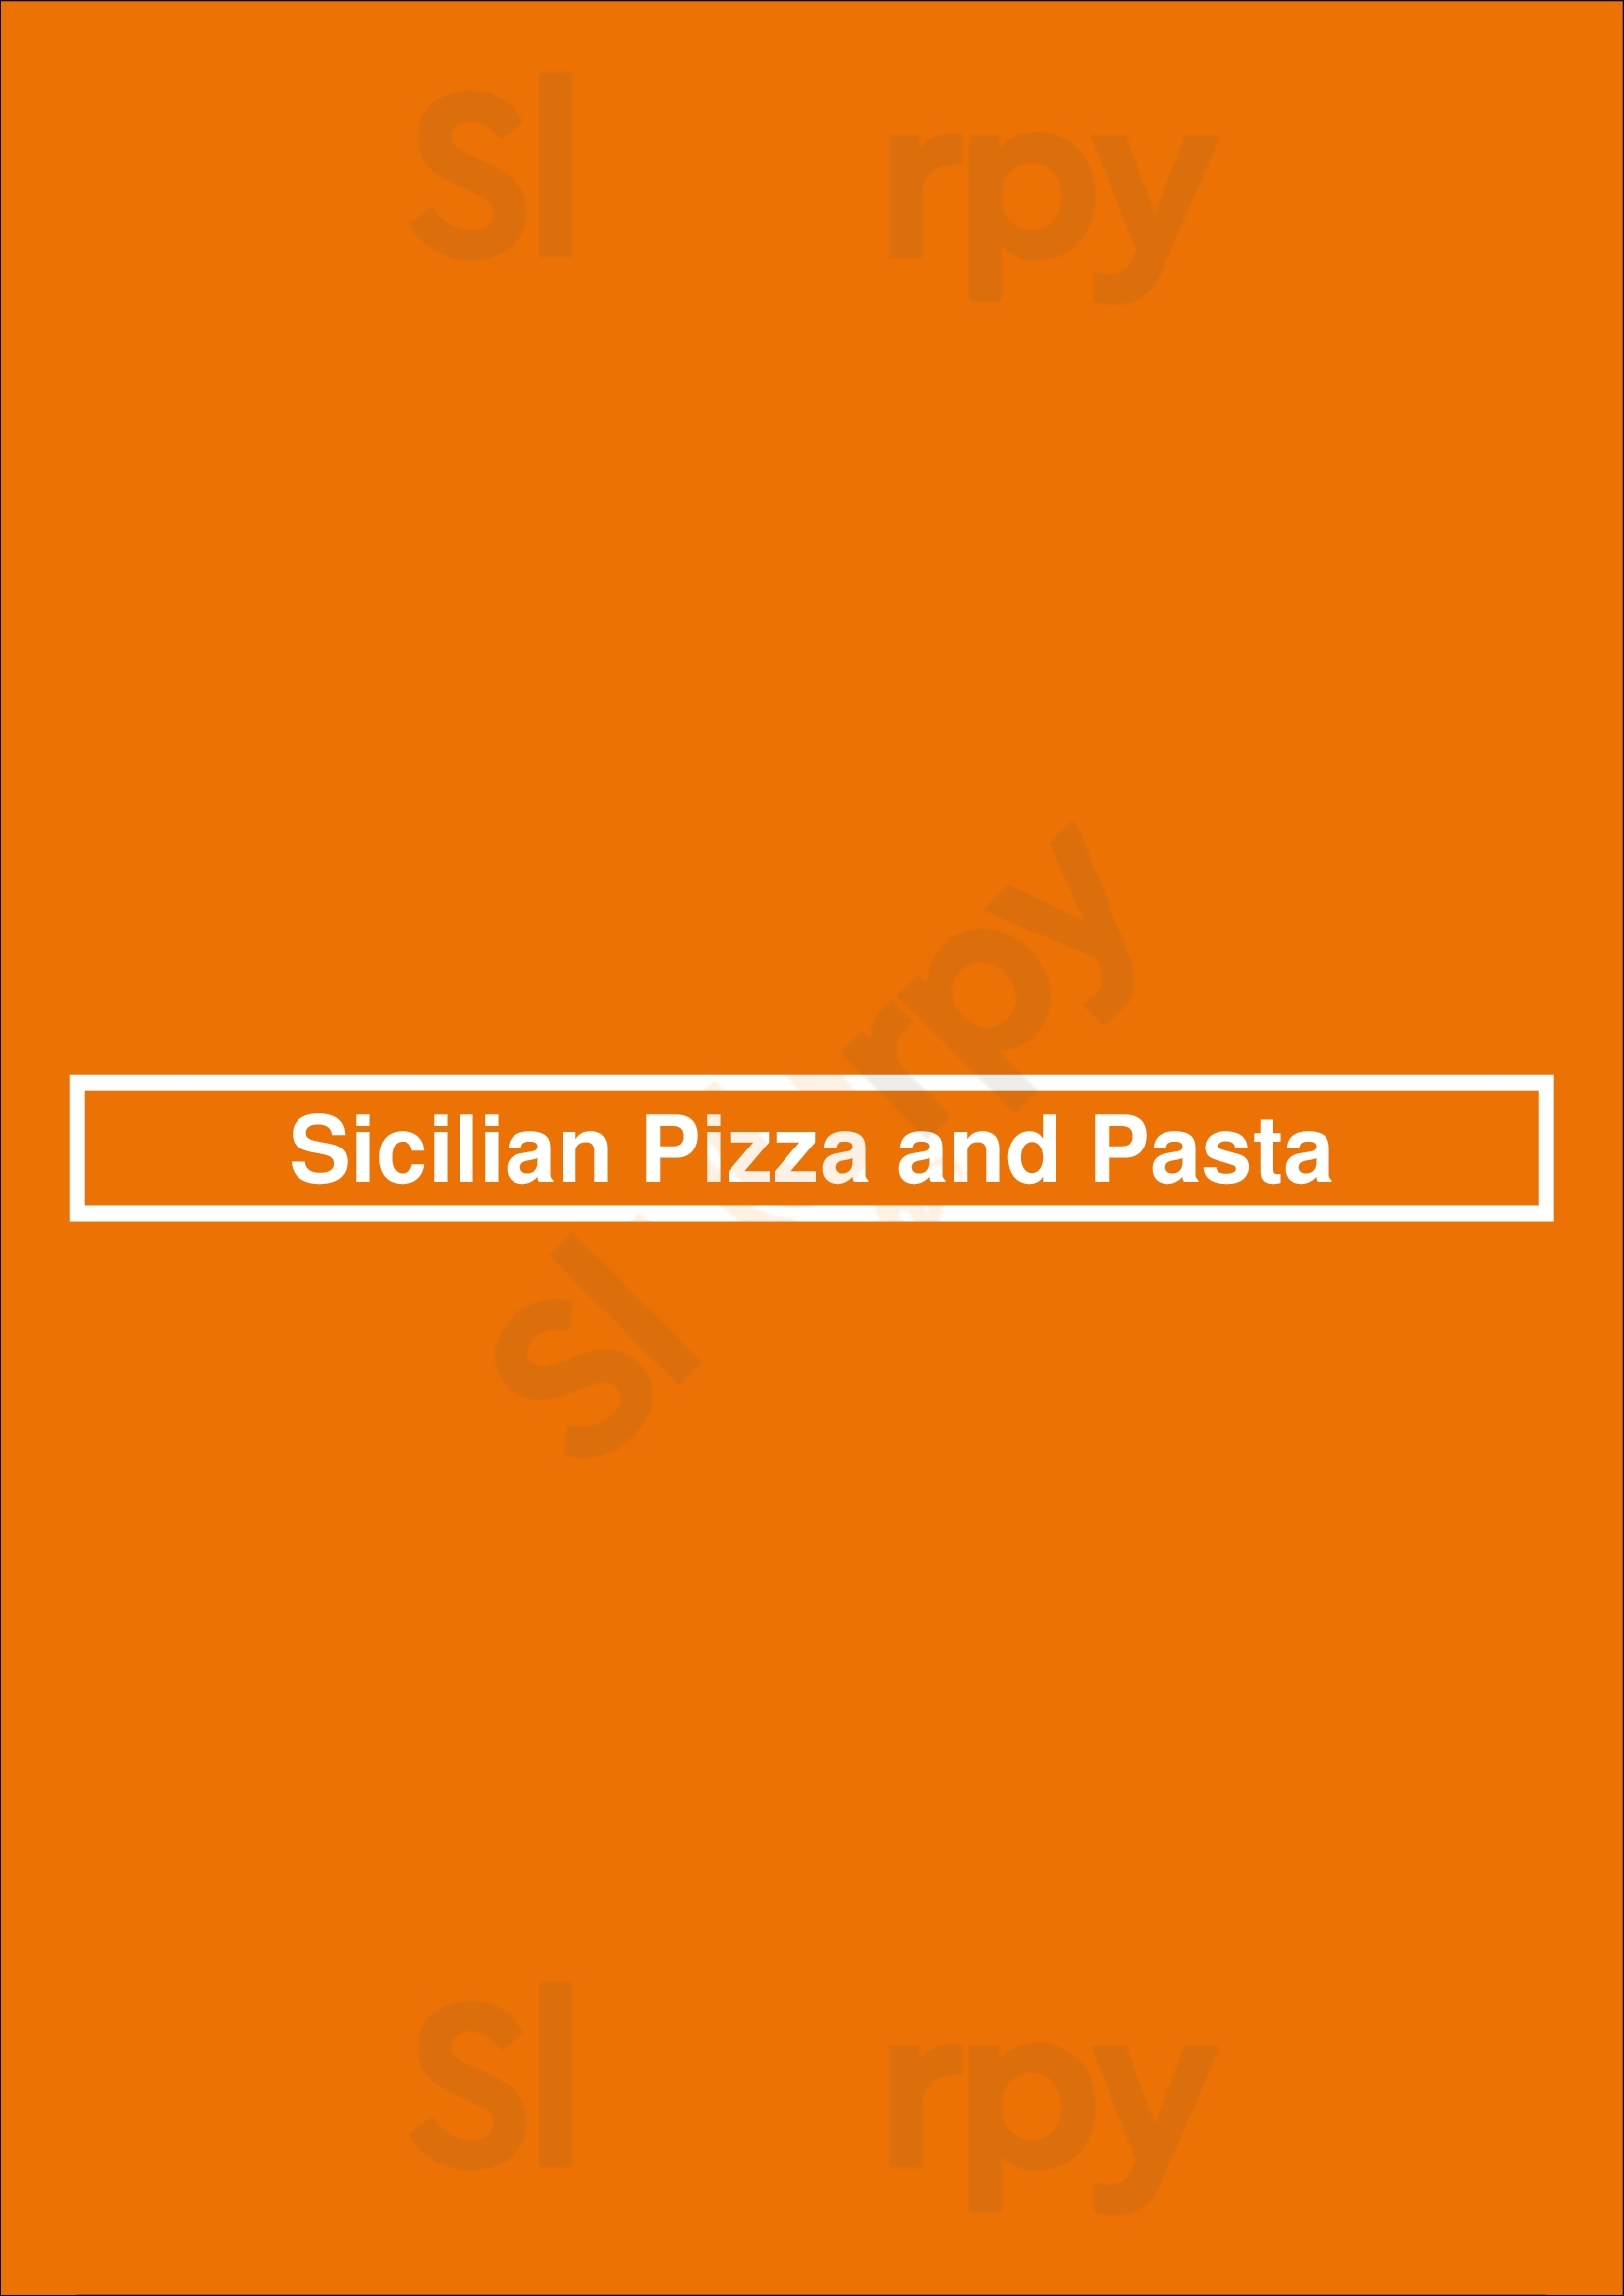 Sicilian Pizza And Pasta Nashville Menu - 1